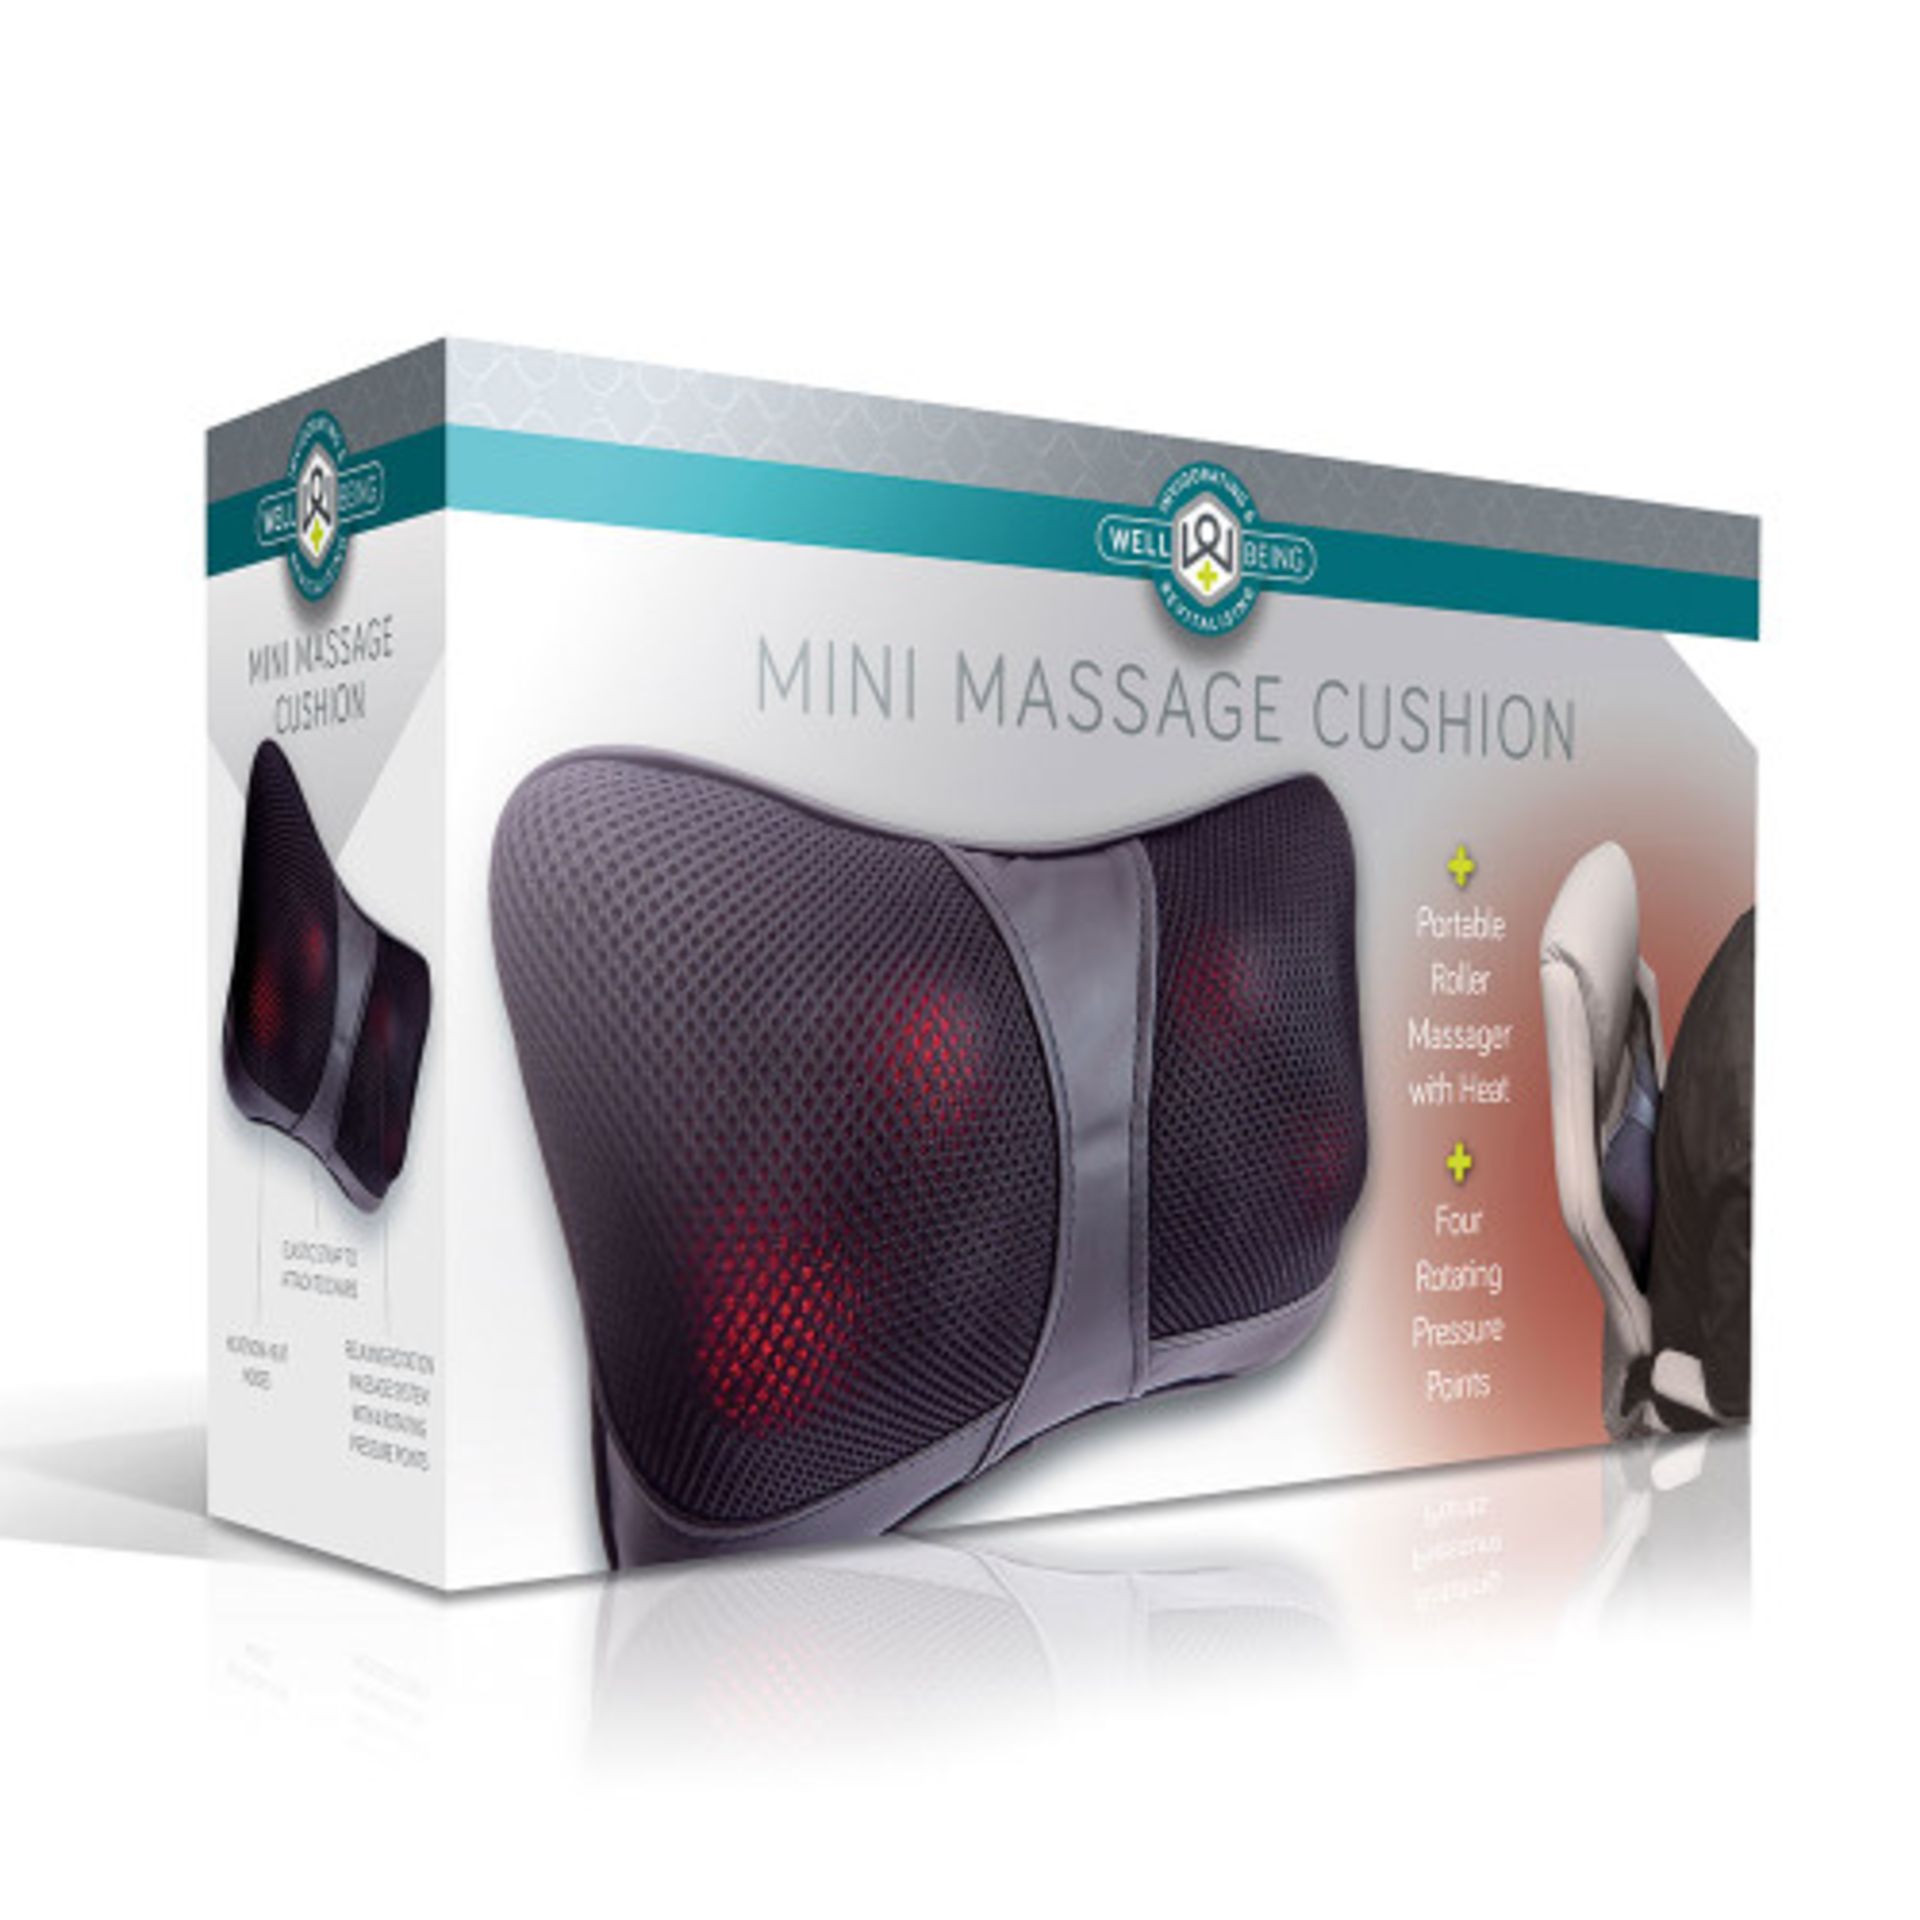 X 2 Sharper Image Mini Massage Cushion With Heat Function RRP £35 Each